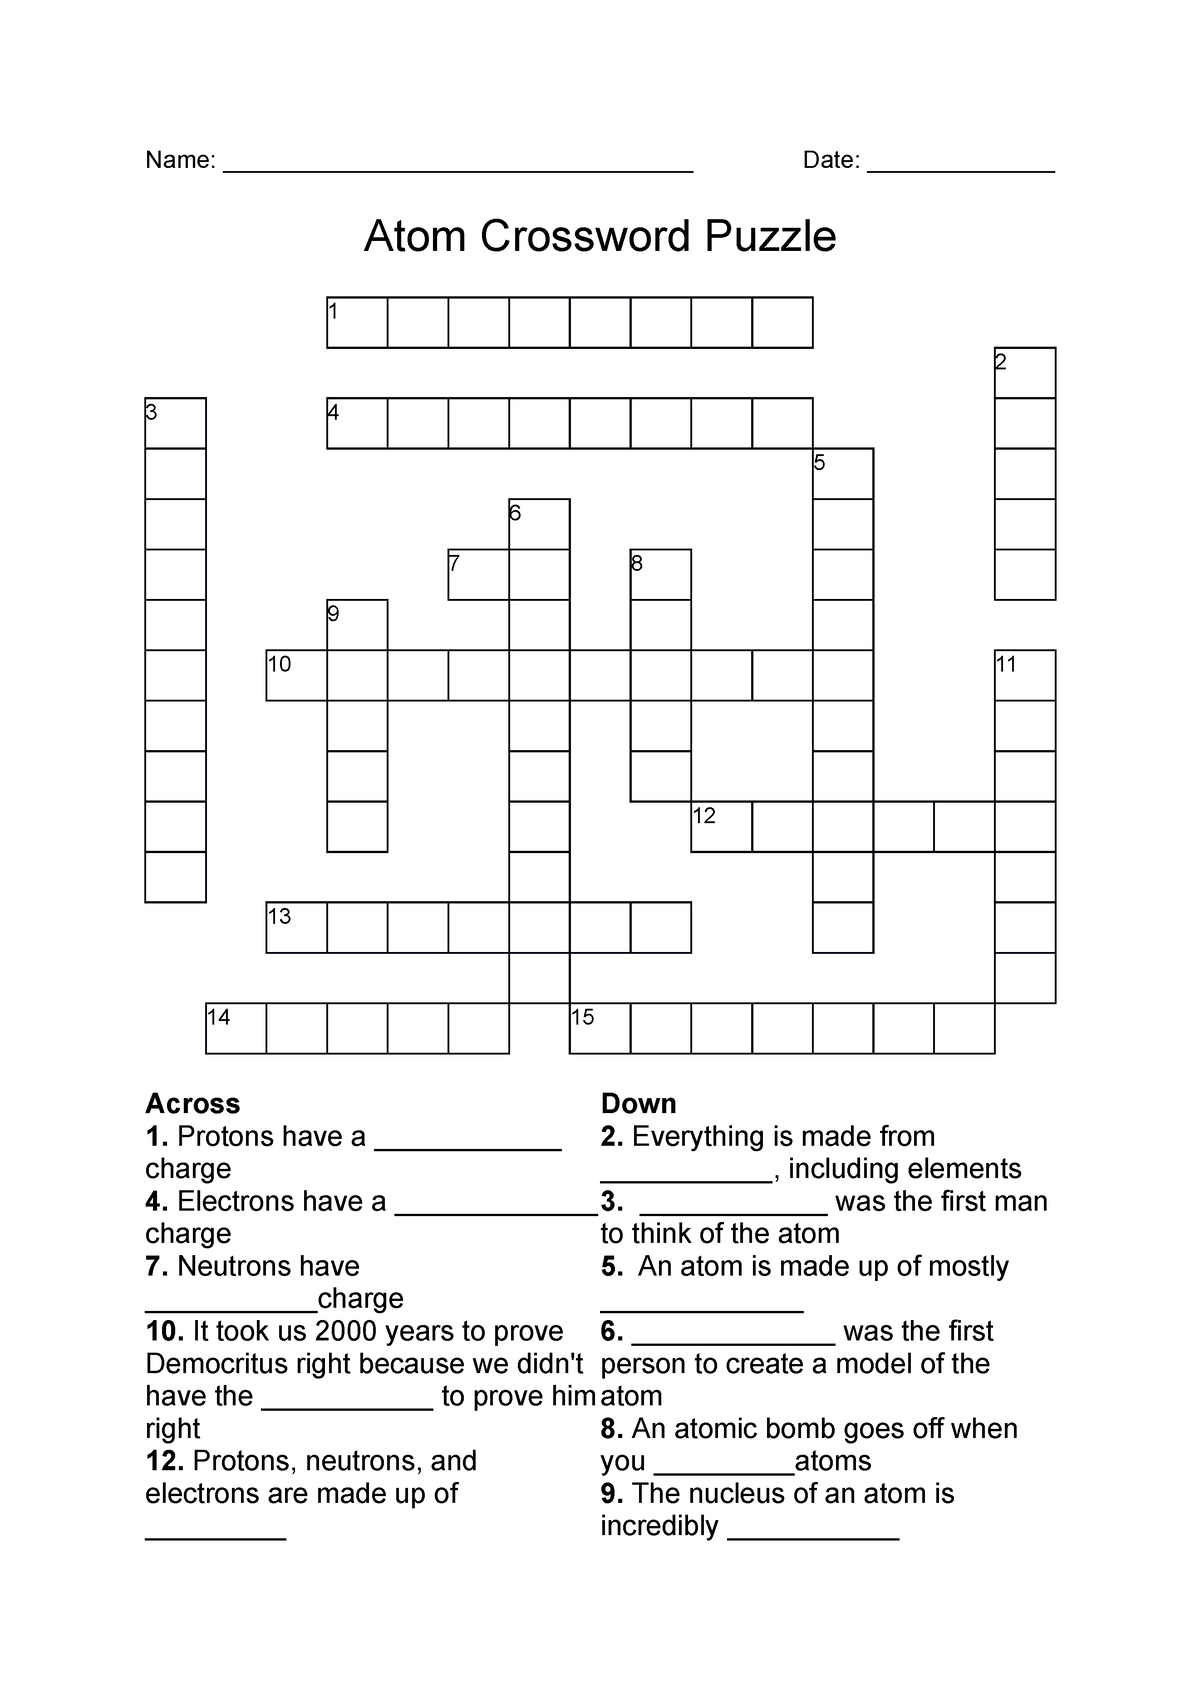 Atom Crossword Puzzle 909fd 62fd44cd Name